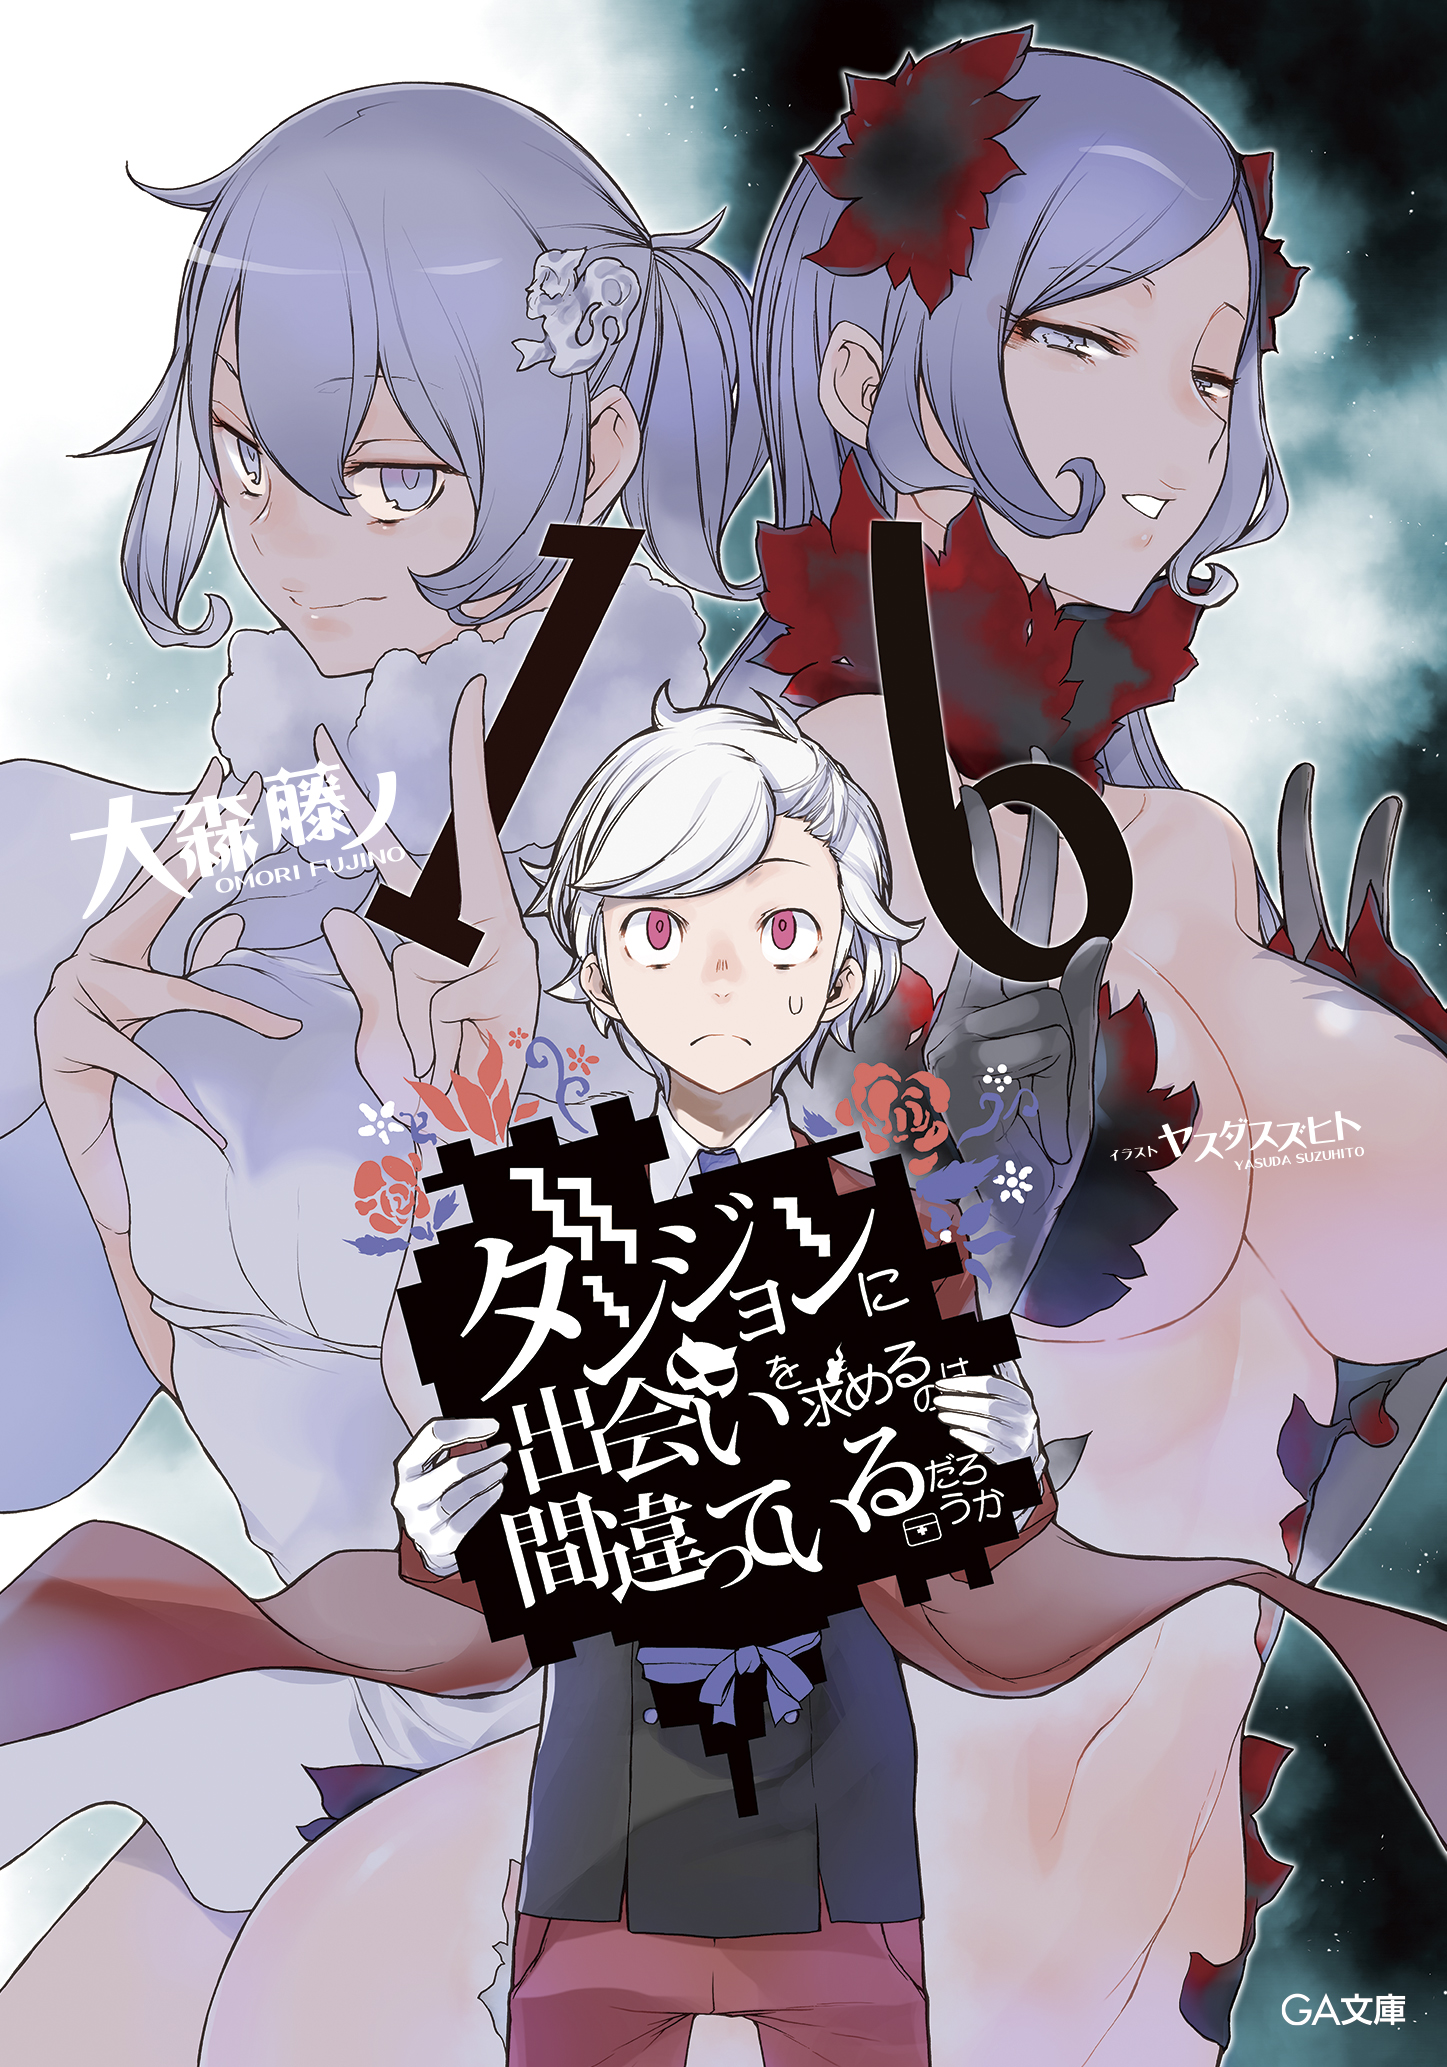 danmachi light novel epub download mega link